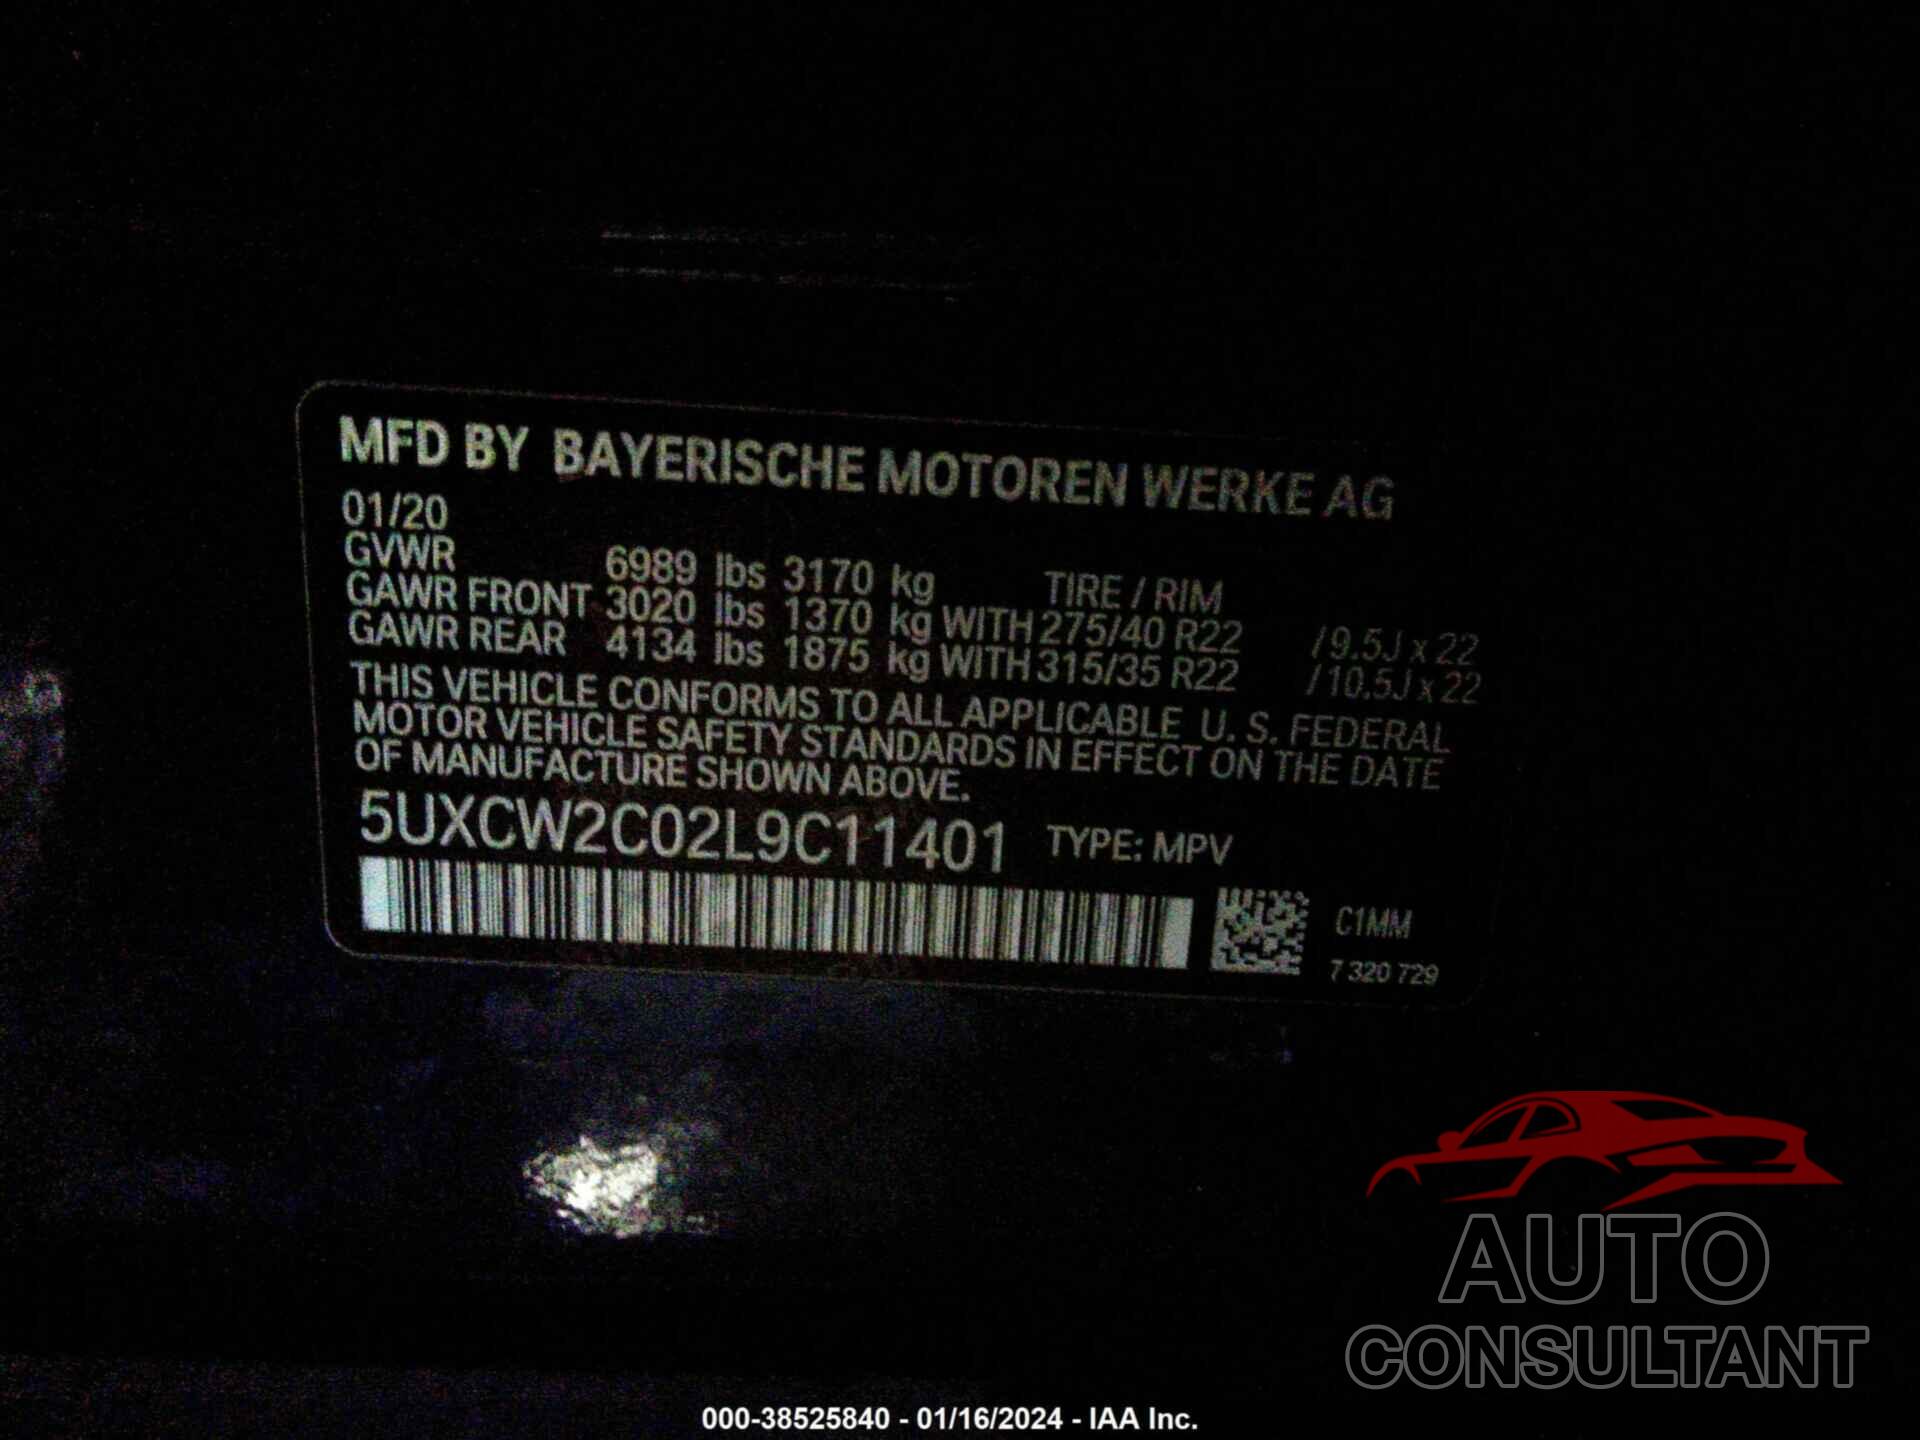 BMW X7 2020 - 5UXCW2C02L9C11401